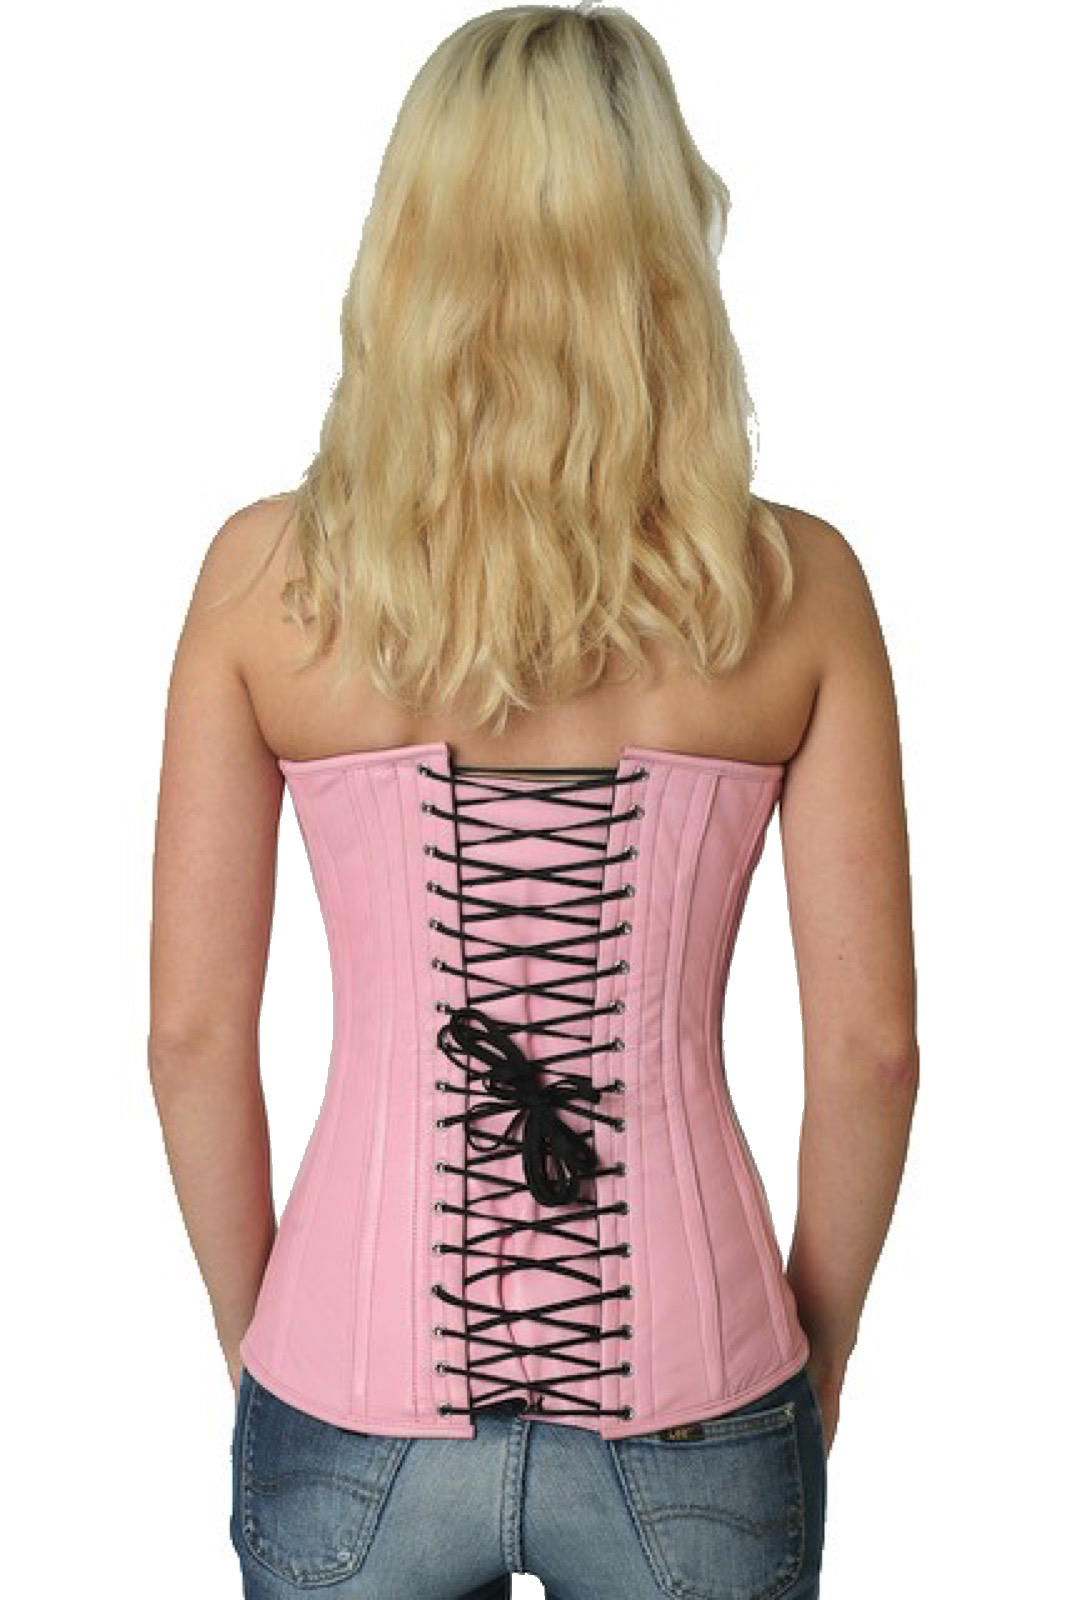 Leren corset pink volborst Korset ly22